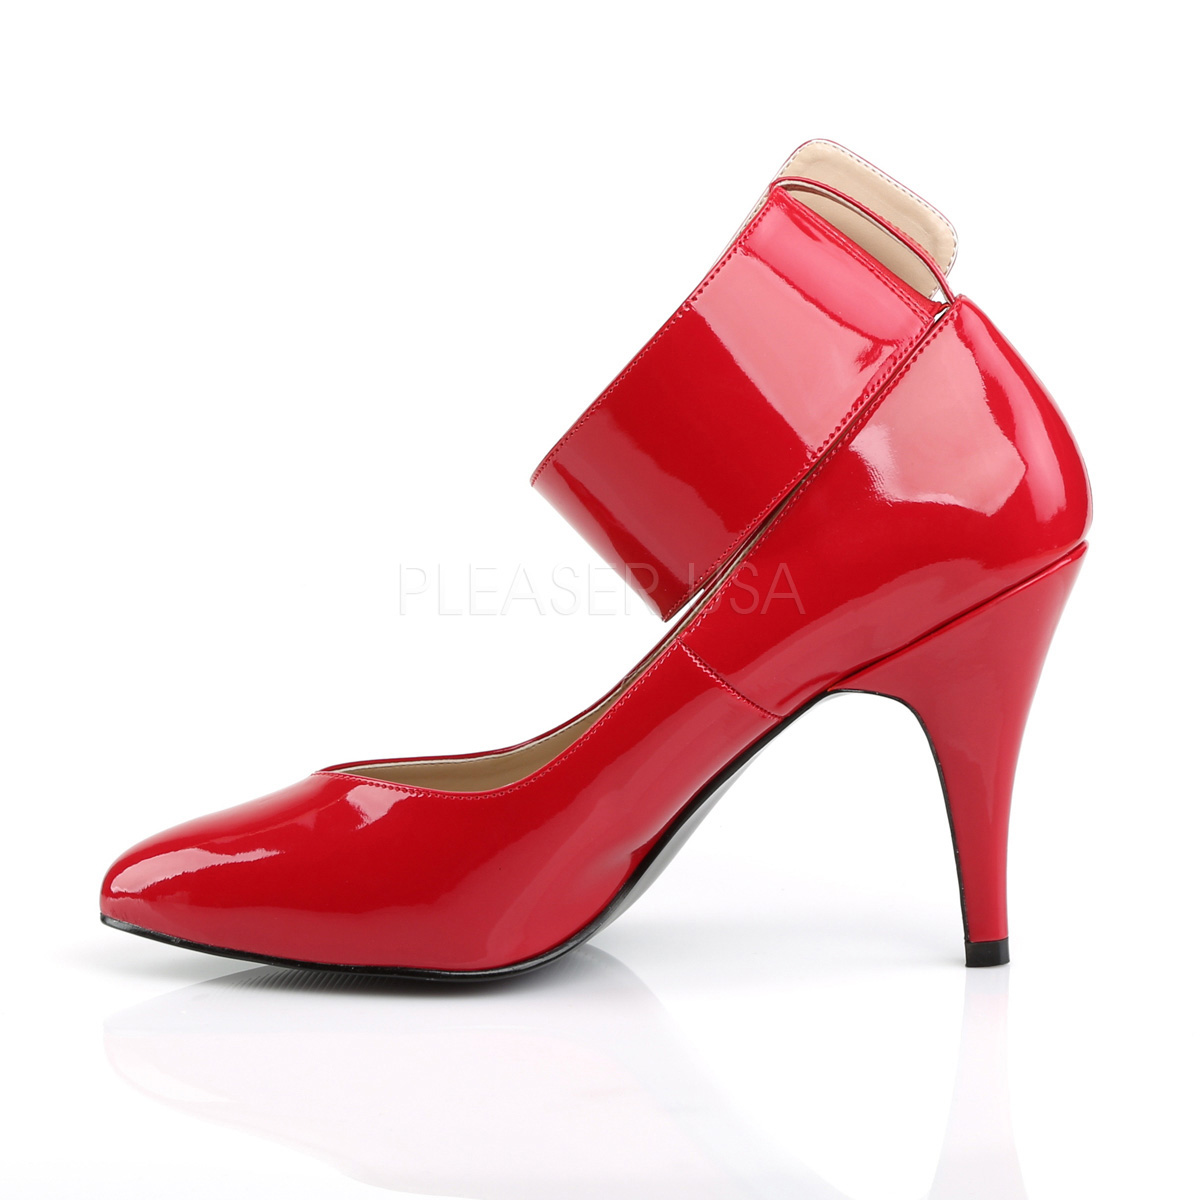 Pleaser DREAM-432 Women's Red Patent Wide Band Ankle Strap Pump Stiletto Sandals 